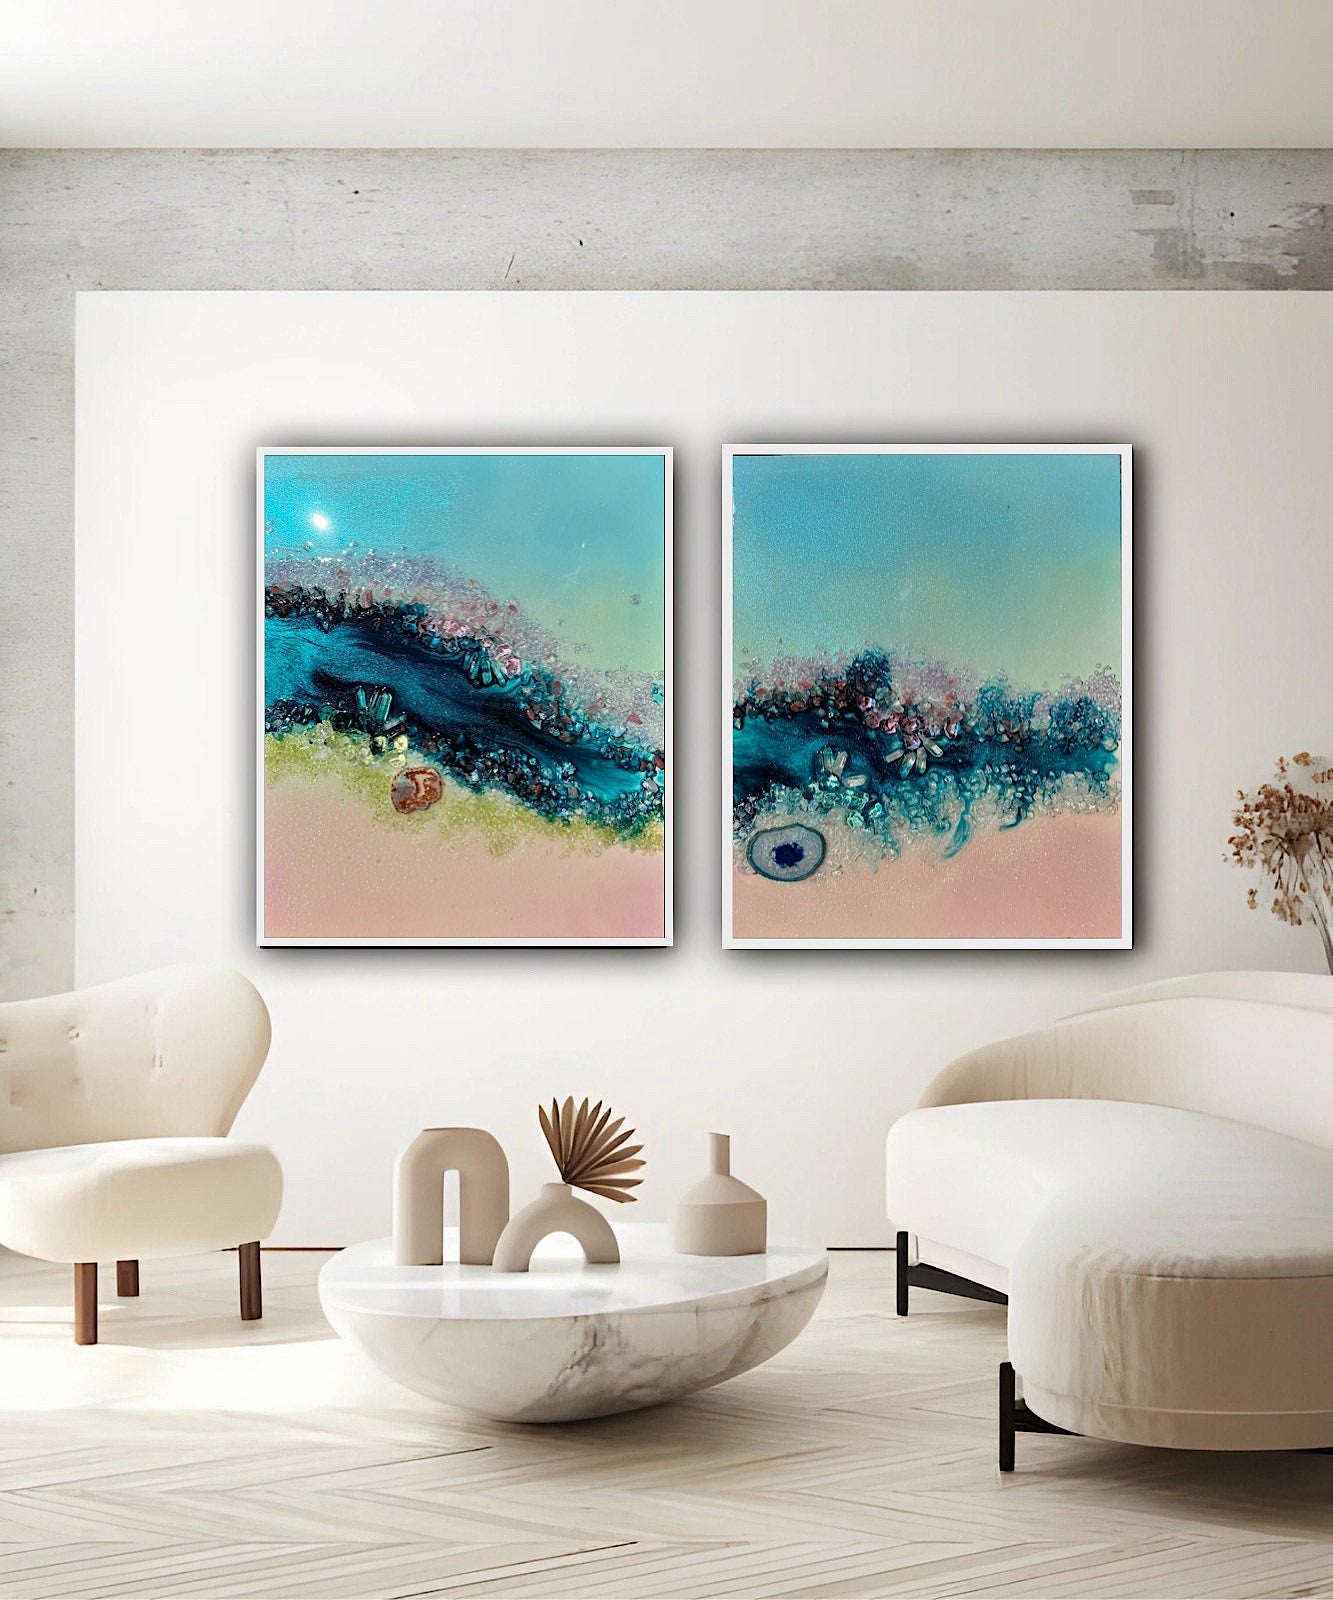 Heart Reef Bliss 2 with Swarovski, Amethyst, Agate, Quartz & Epoxy Glass on Canvas 40x50cm (Copy) (Copy)